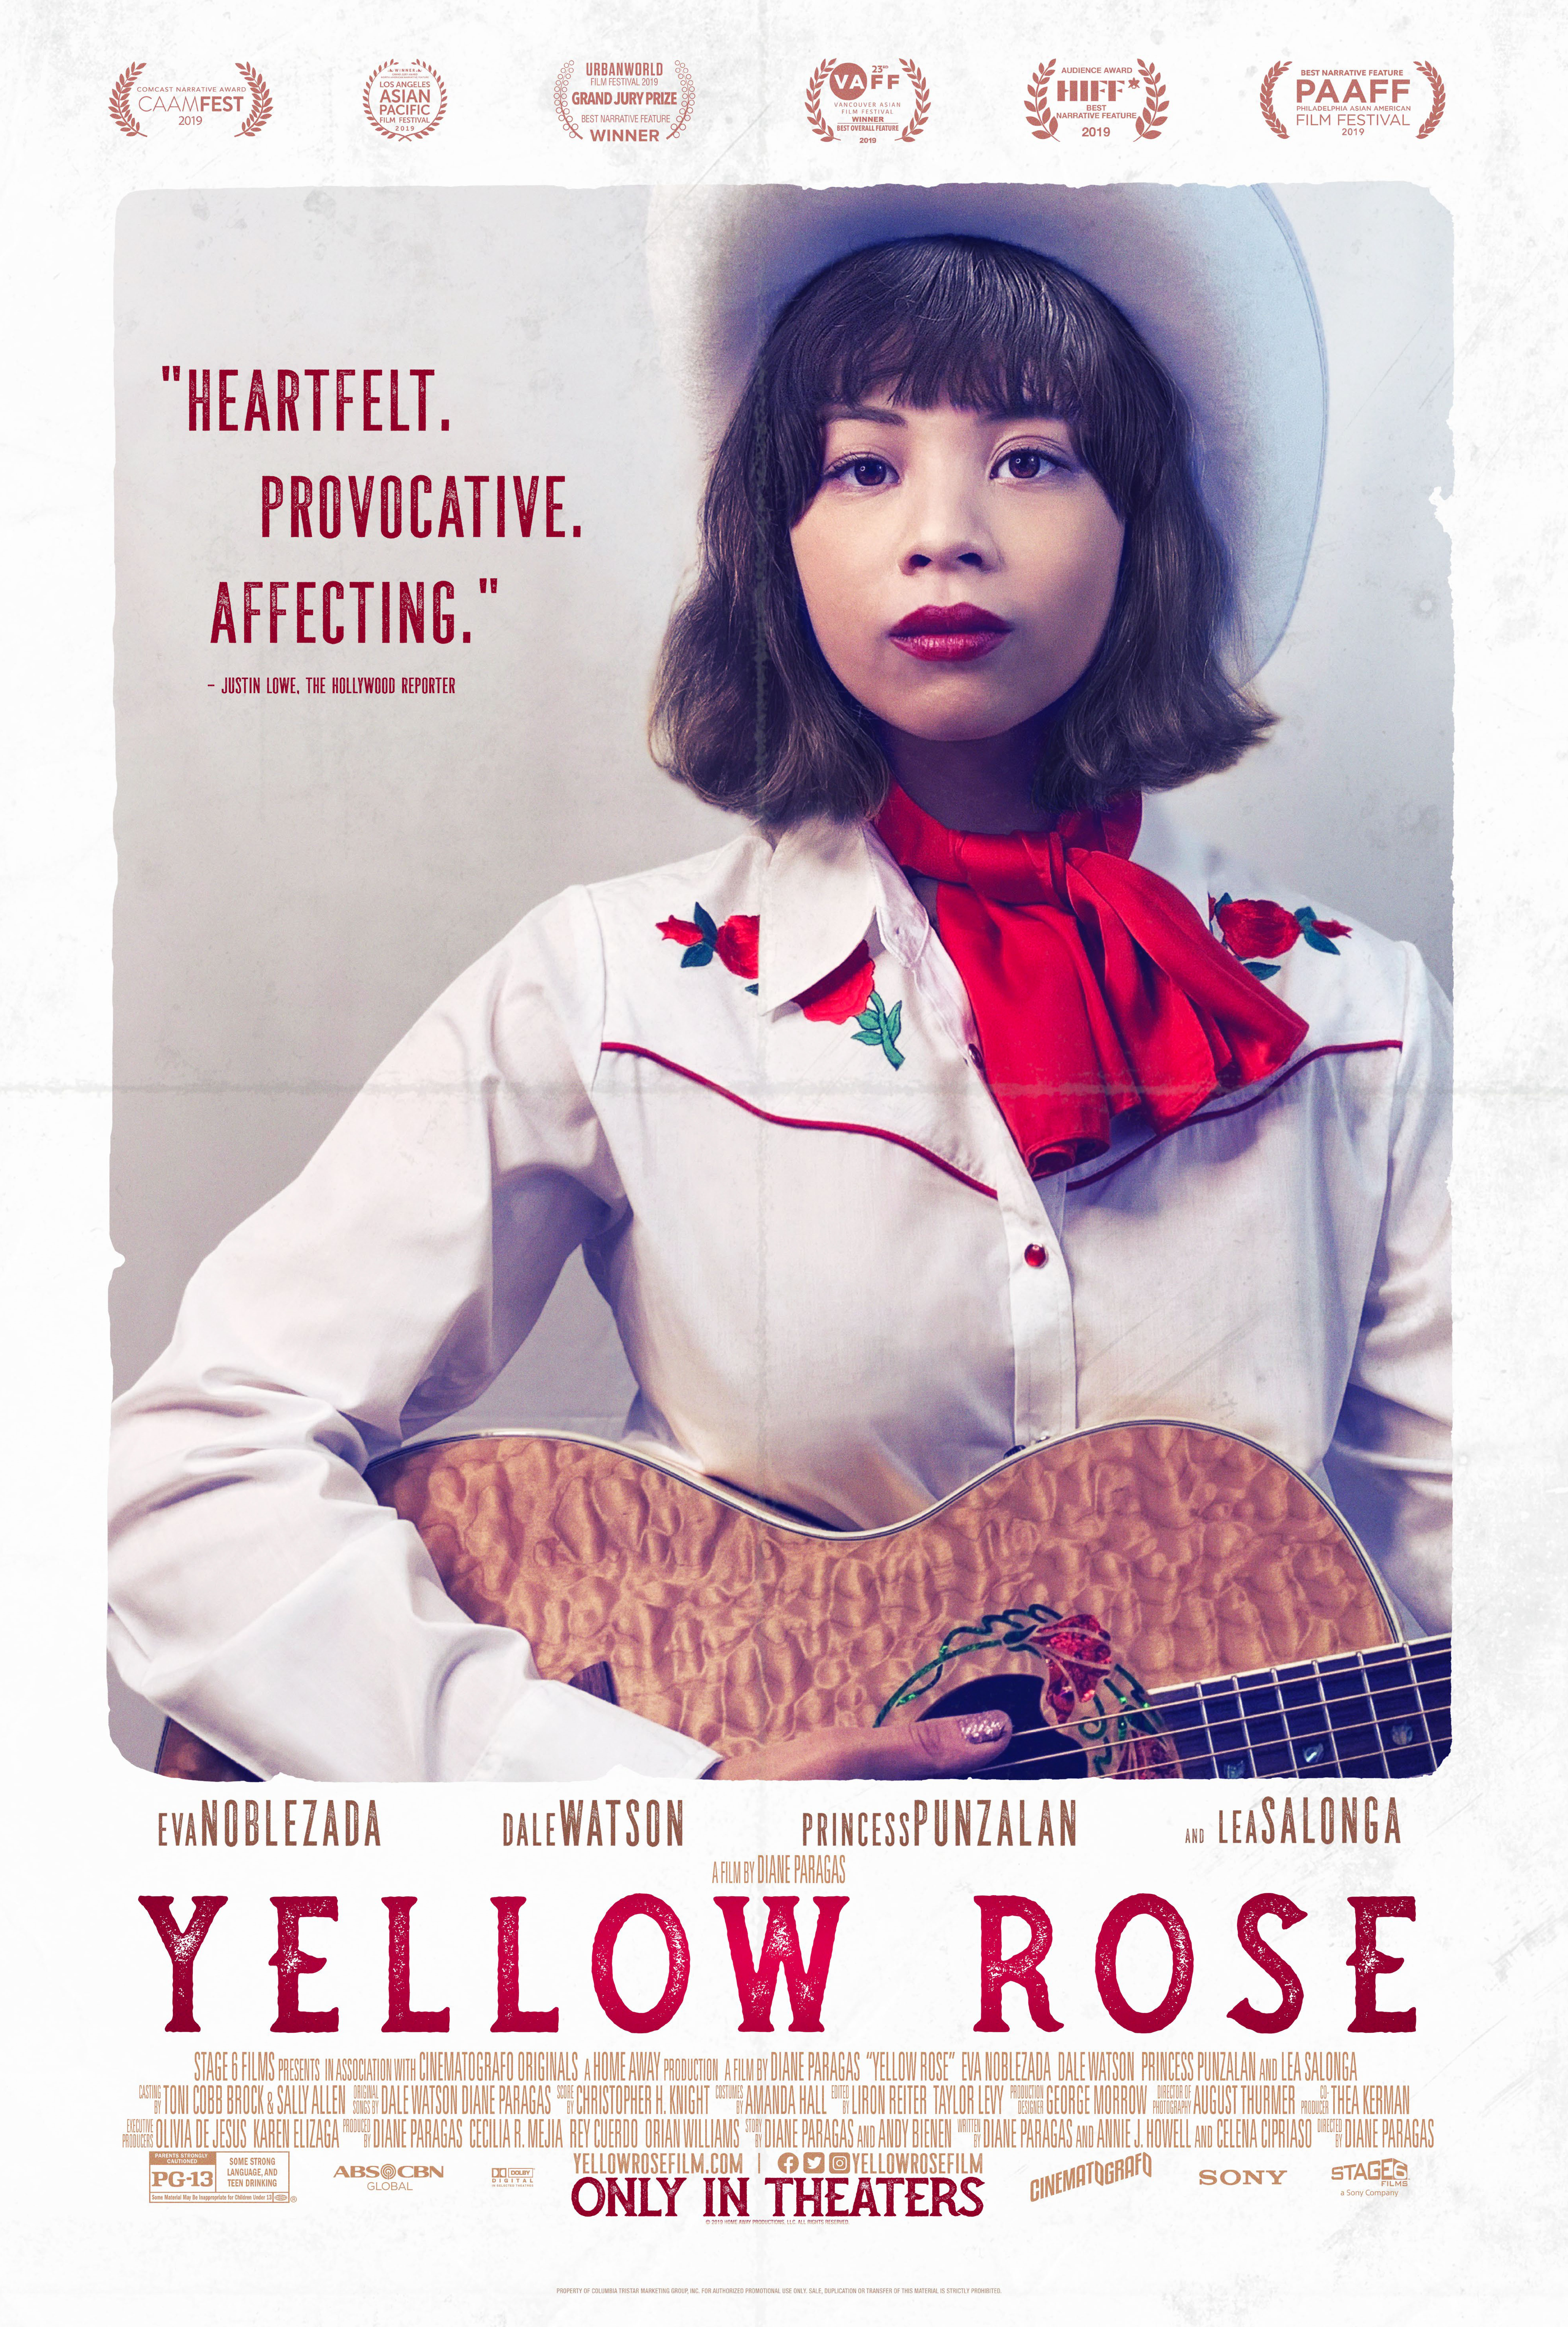 Nonton film Yellow Rose layarkaca21 indoxx1 ganool online streaming terbaru